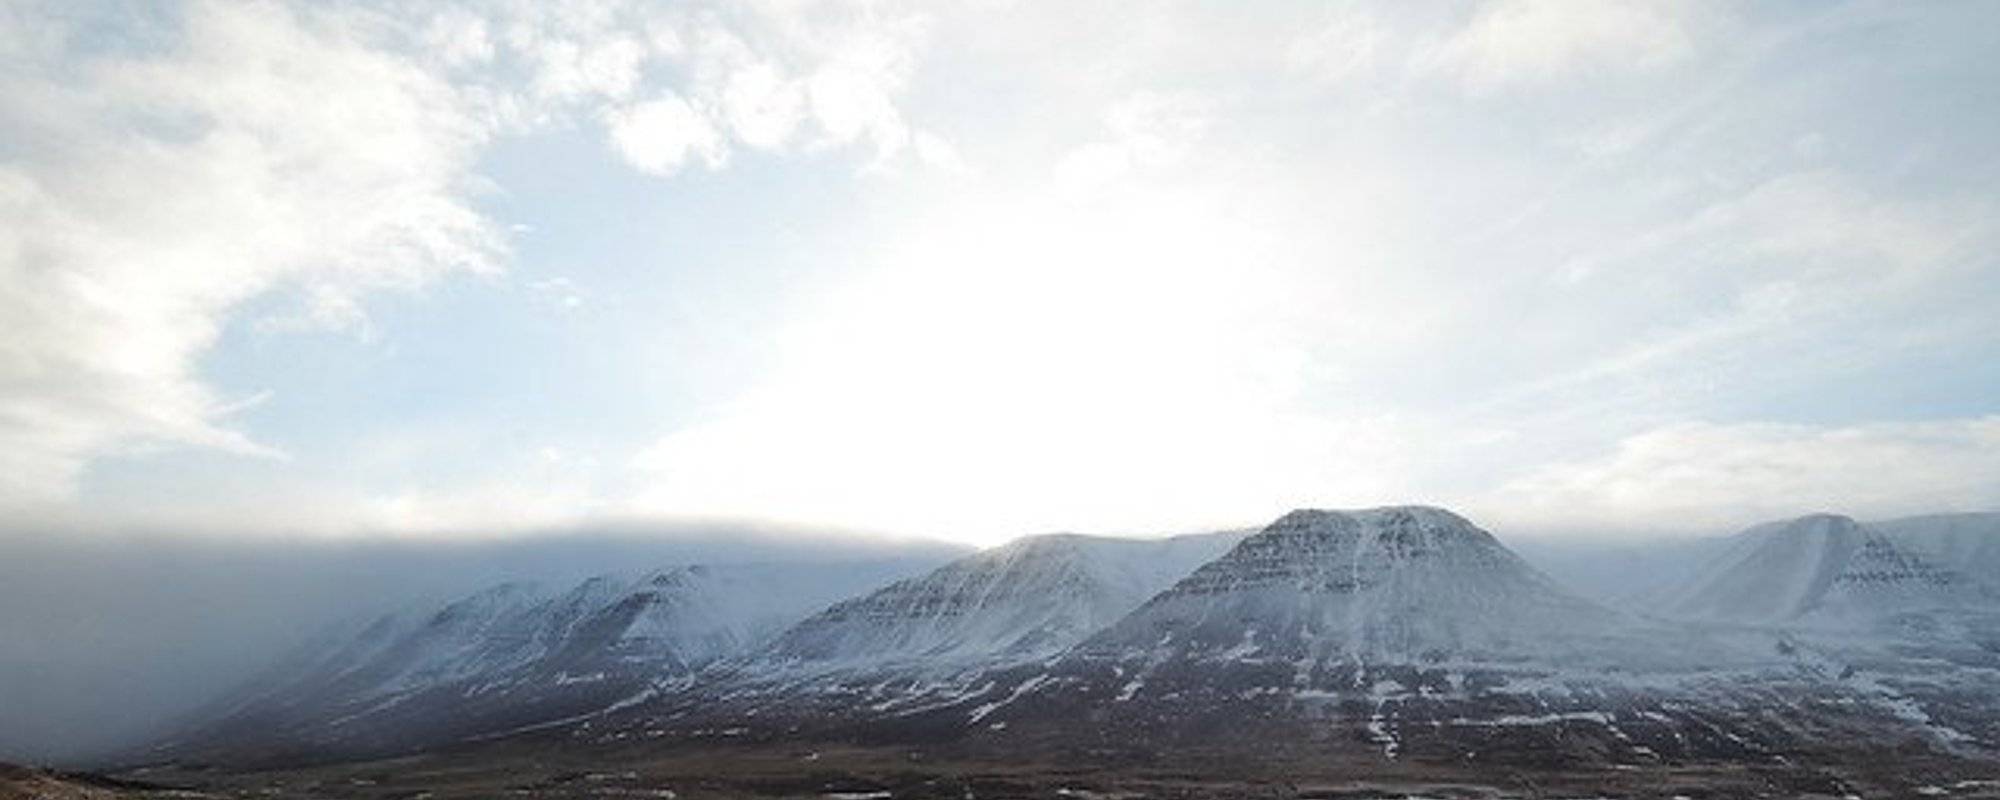 Iceland - Quick Тravel Photo Contest, Edition #15